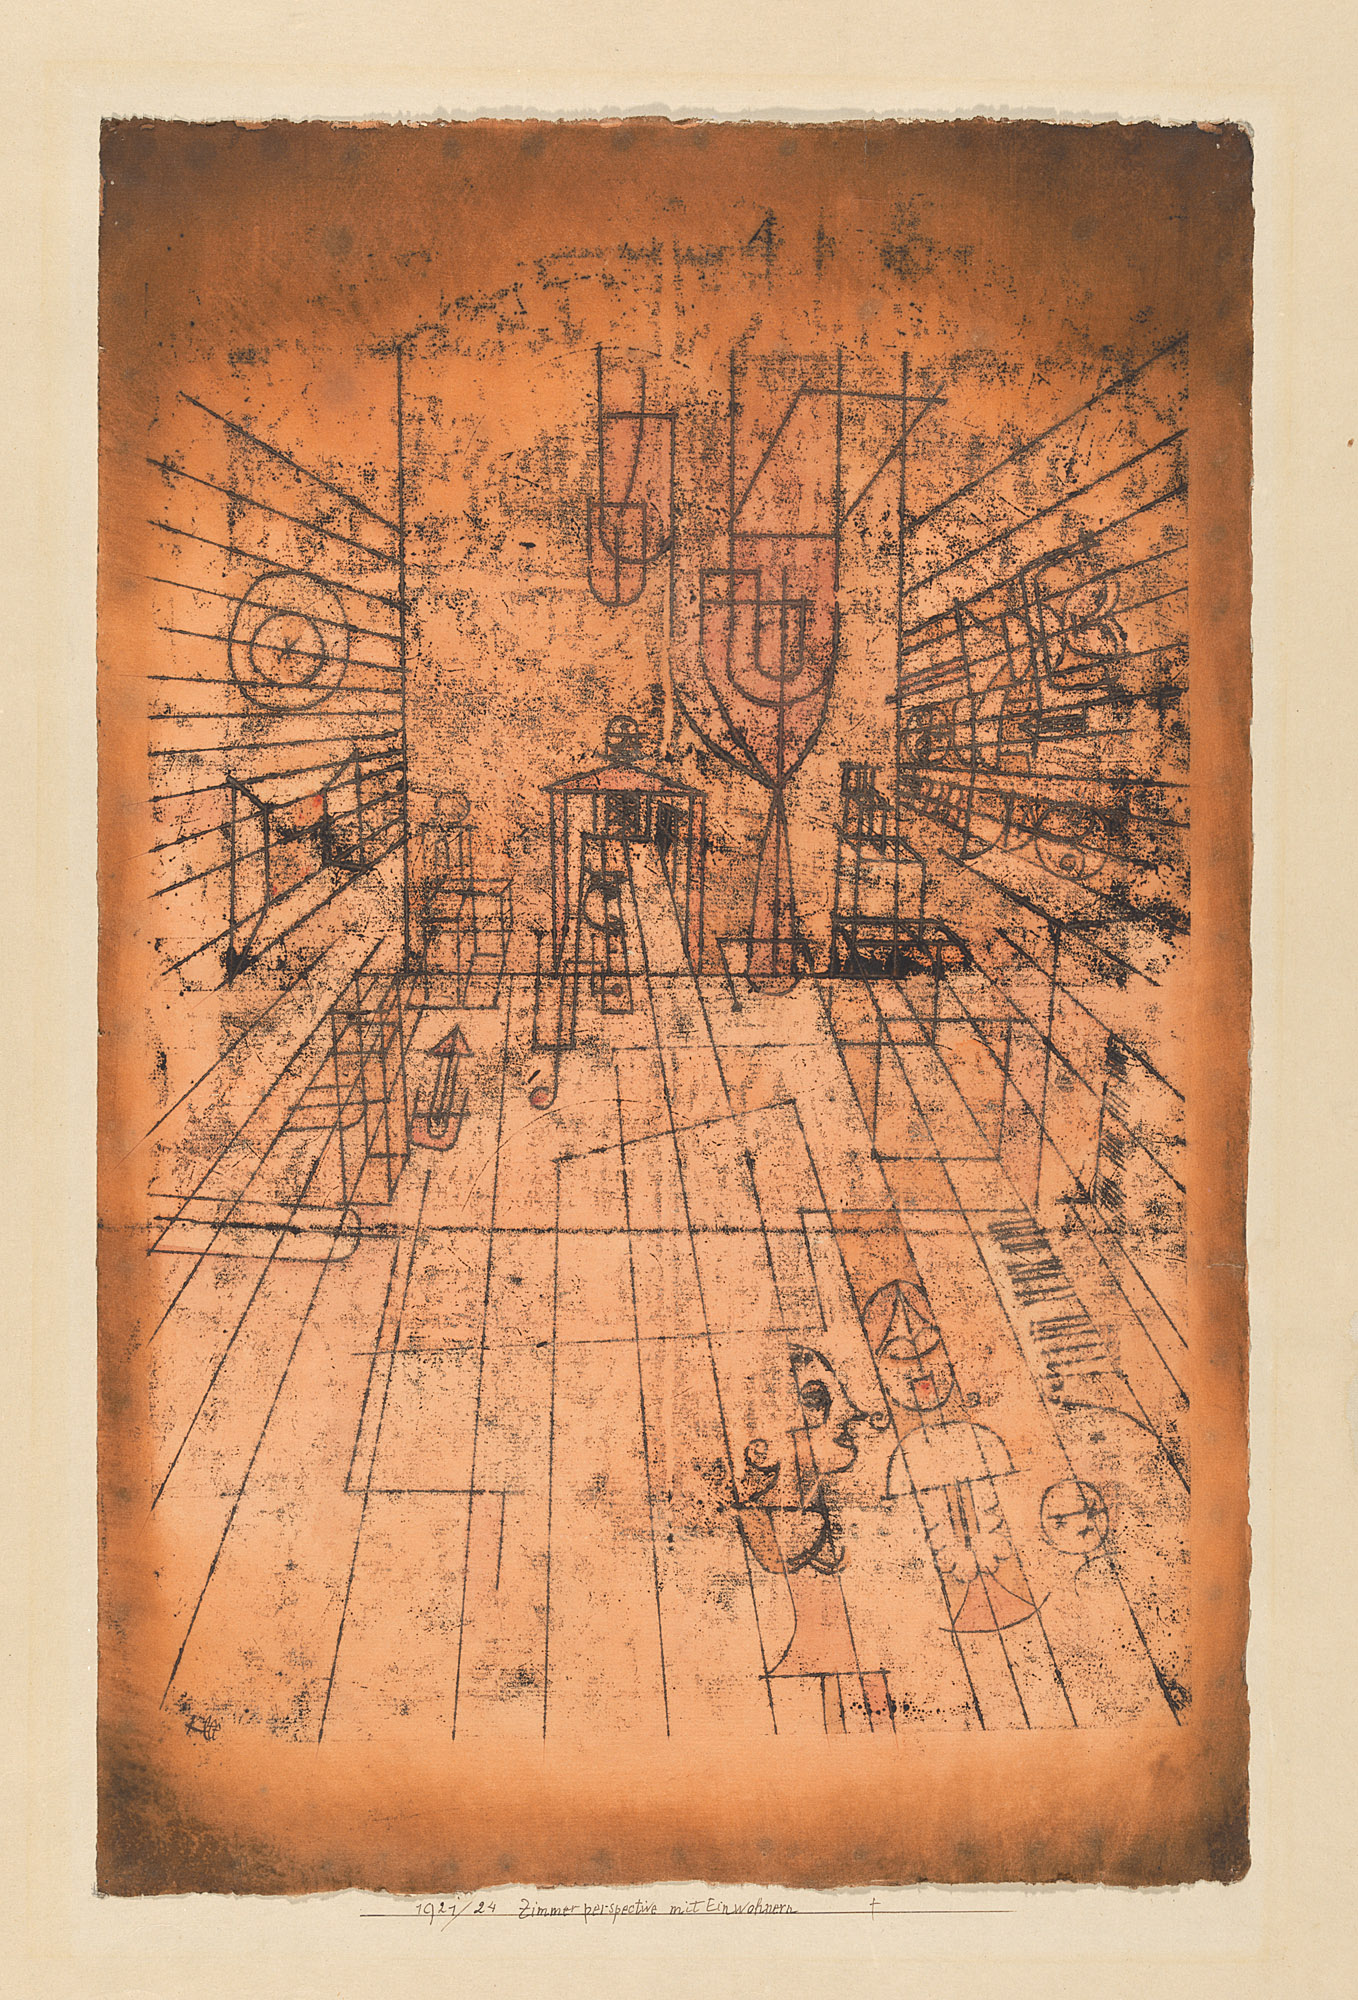 Room Perspective with Inhabitants by Paul Klee - 1921 - 48,5 x 31,7 cm Zentrum Paul Klee